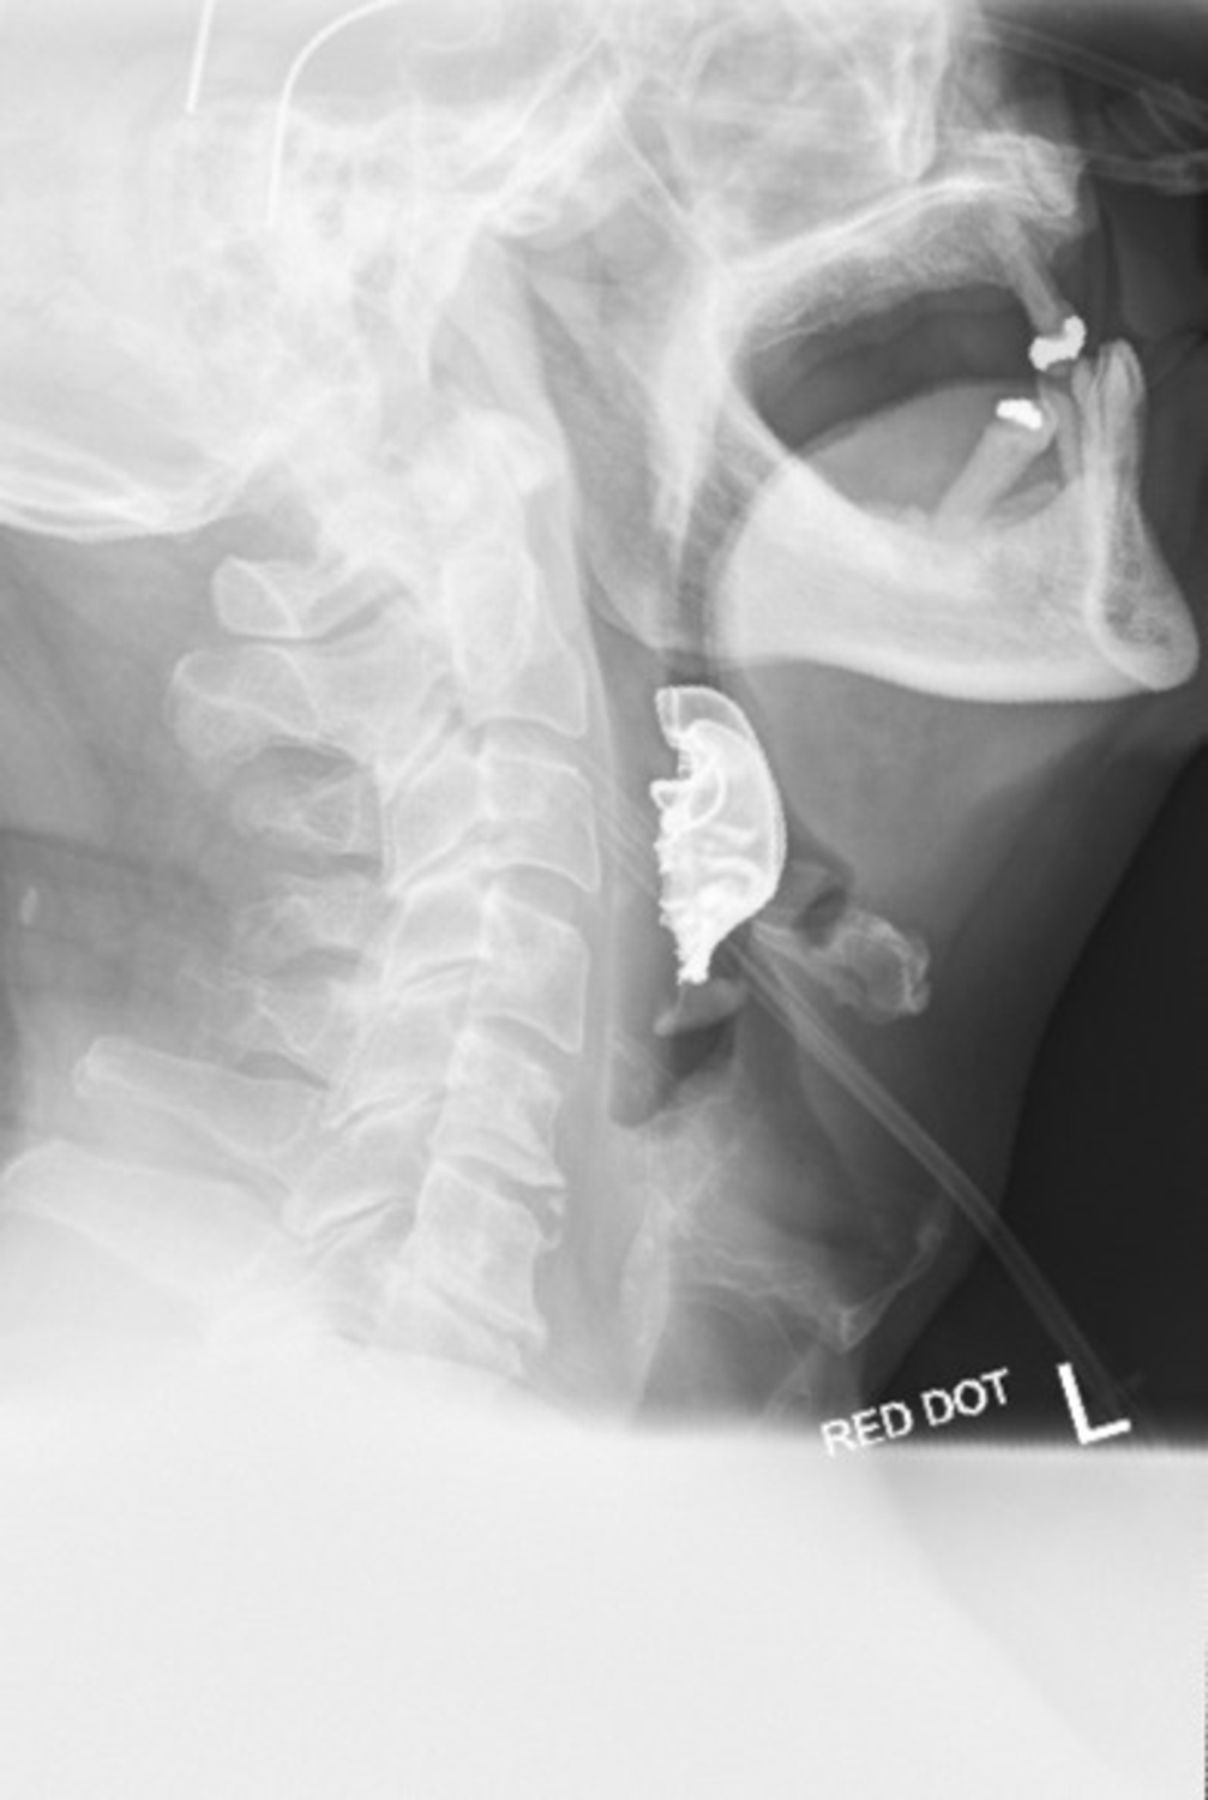 Raio-X revelou prótese dentária presa na laringe do paciente (Foto: BMJ Case Reports)